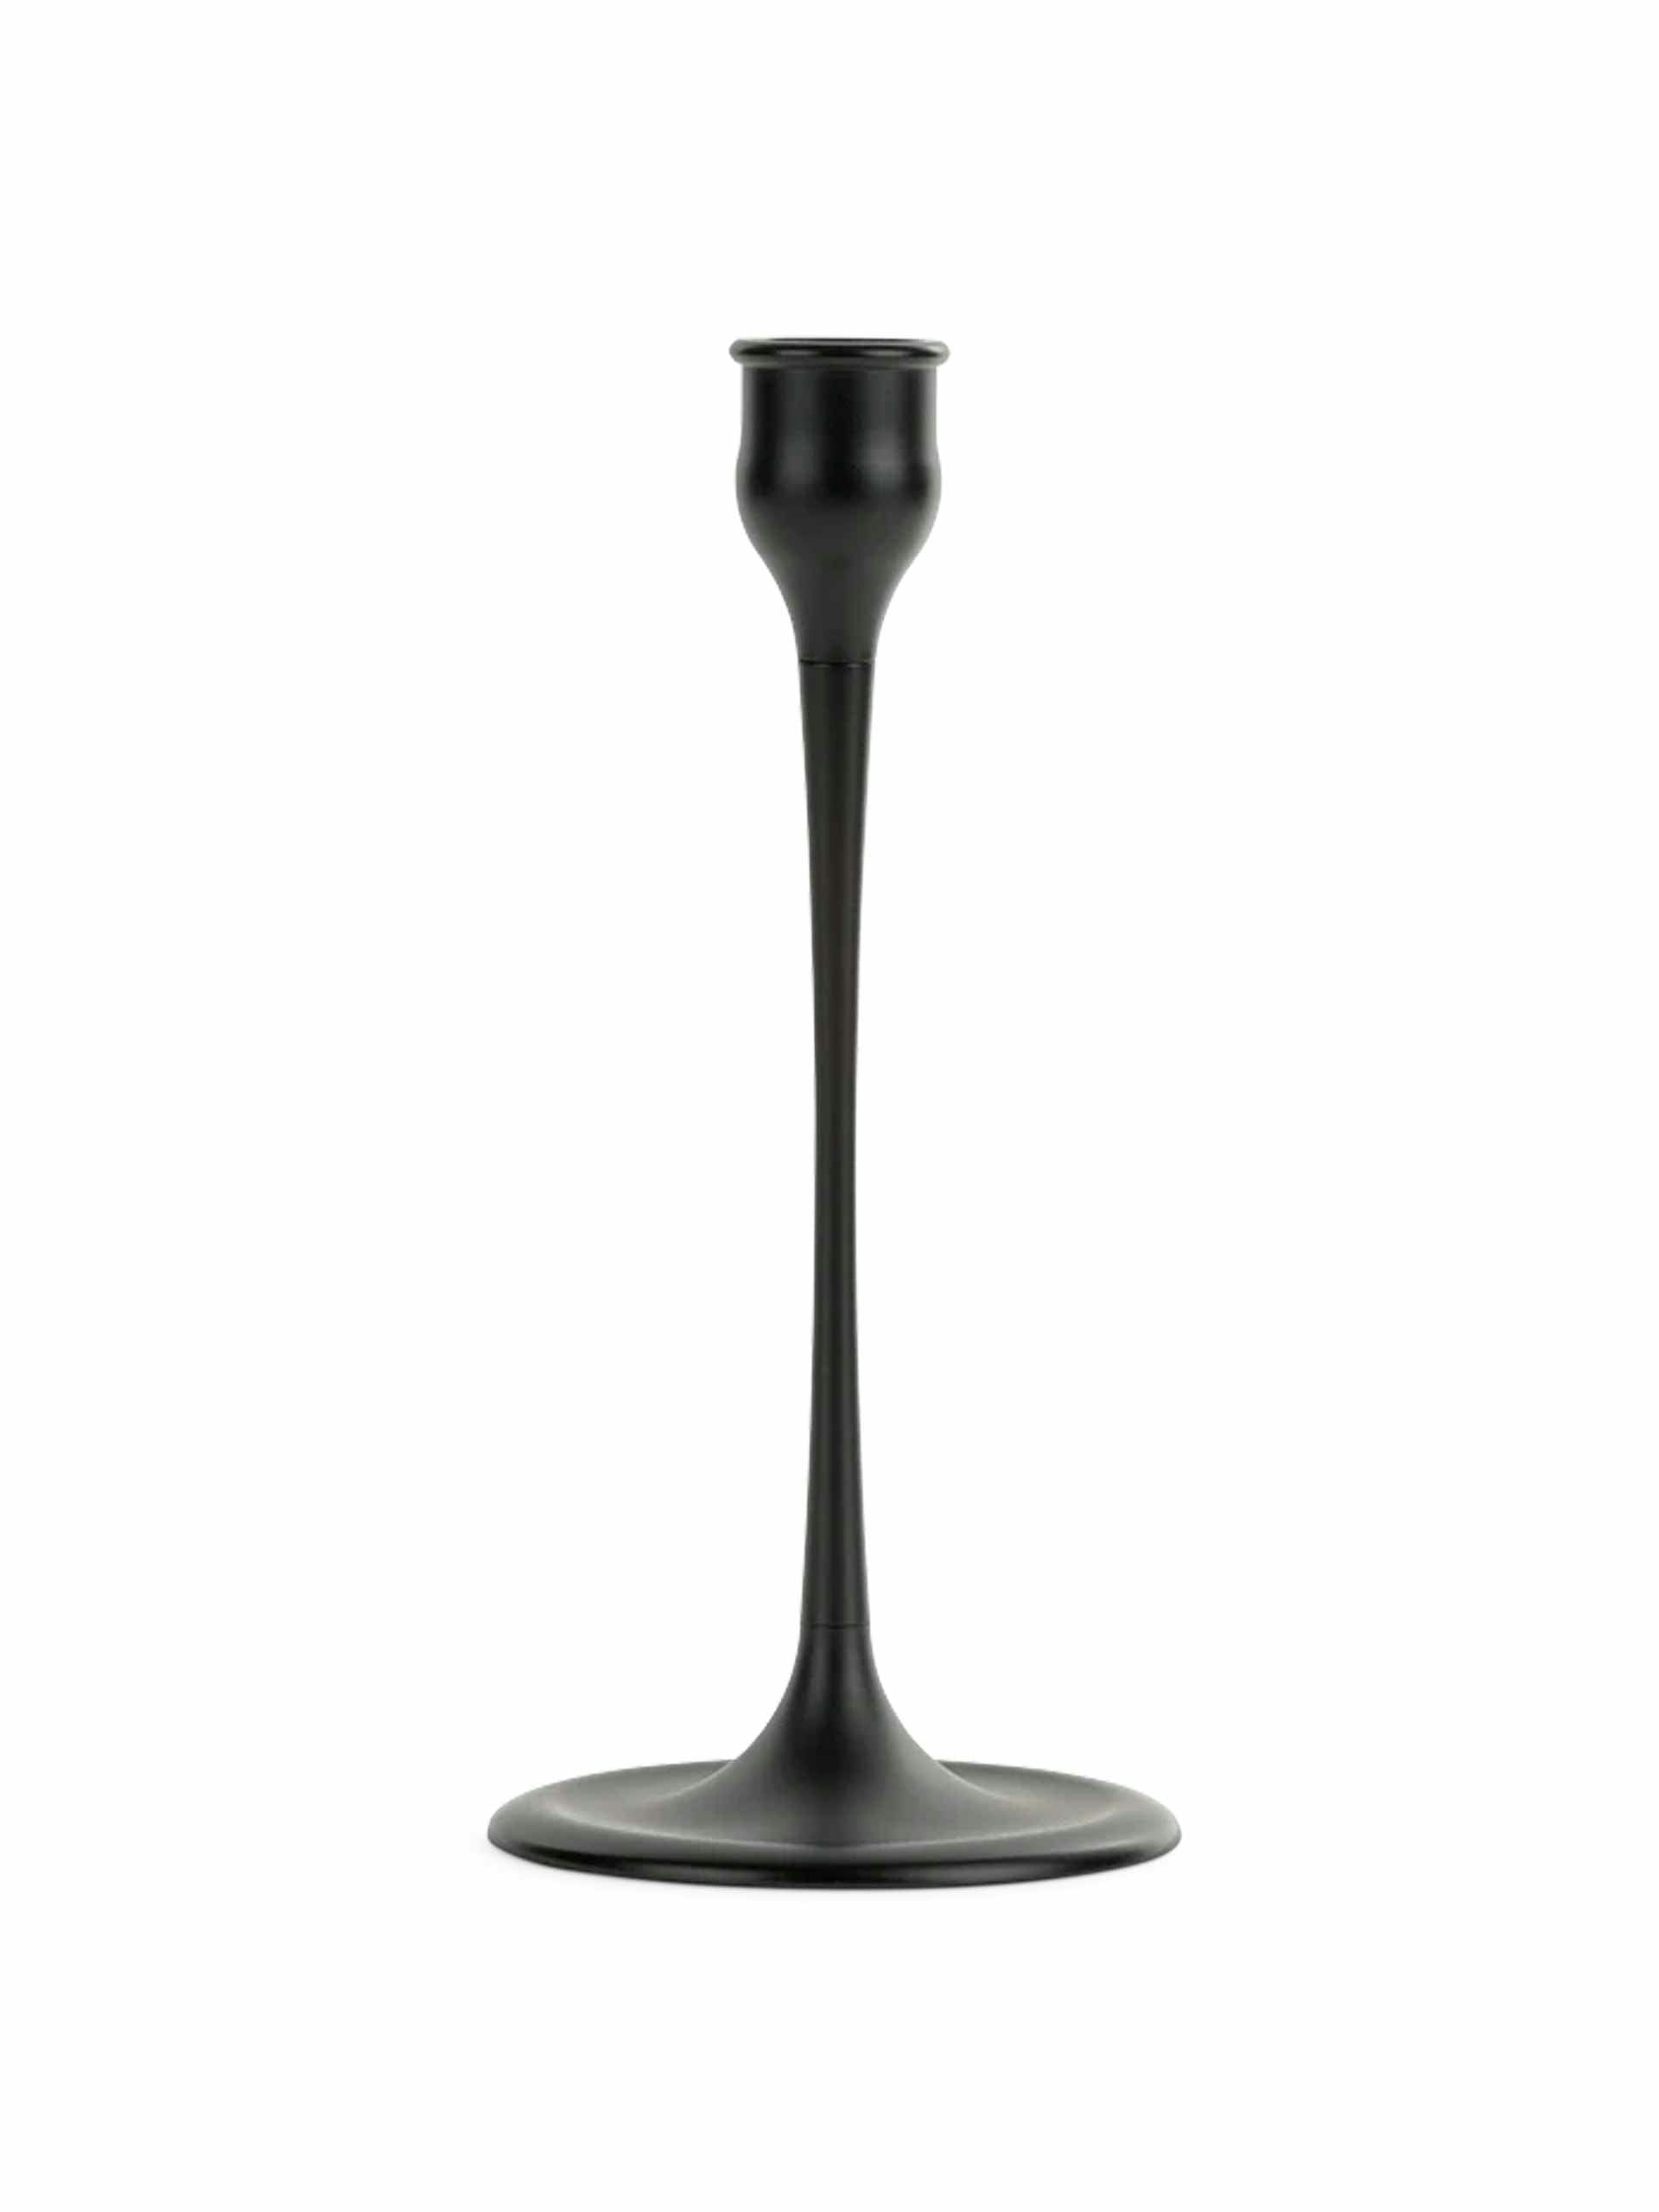 Tall Heddon candlestick in Warm Black